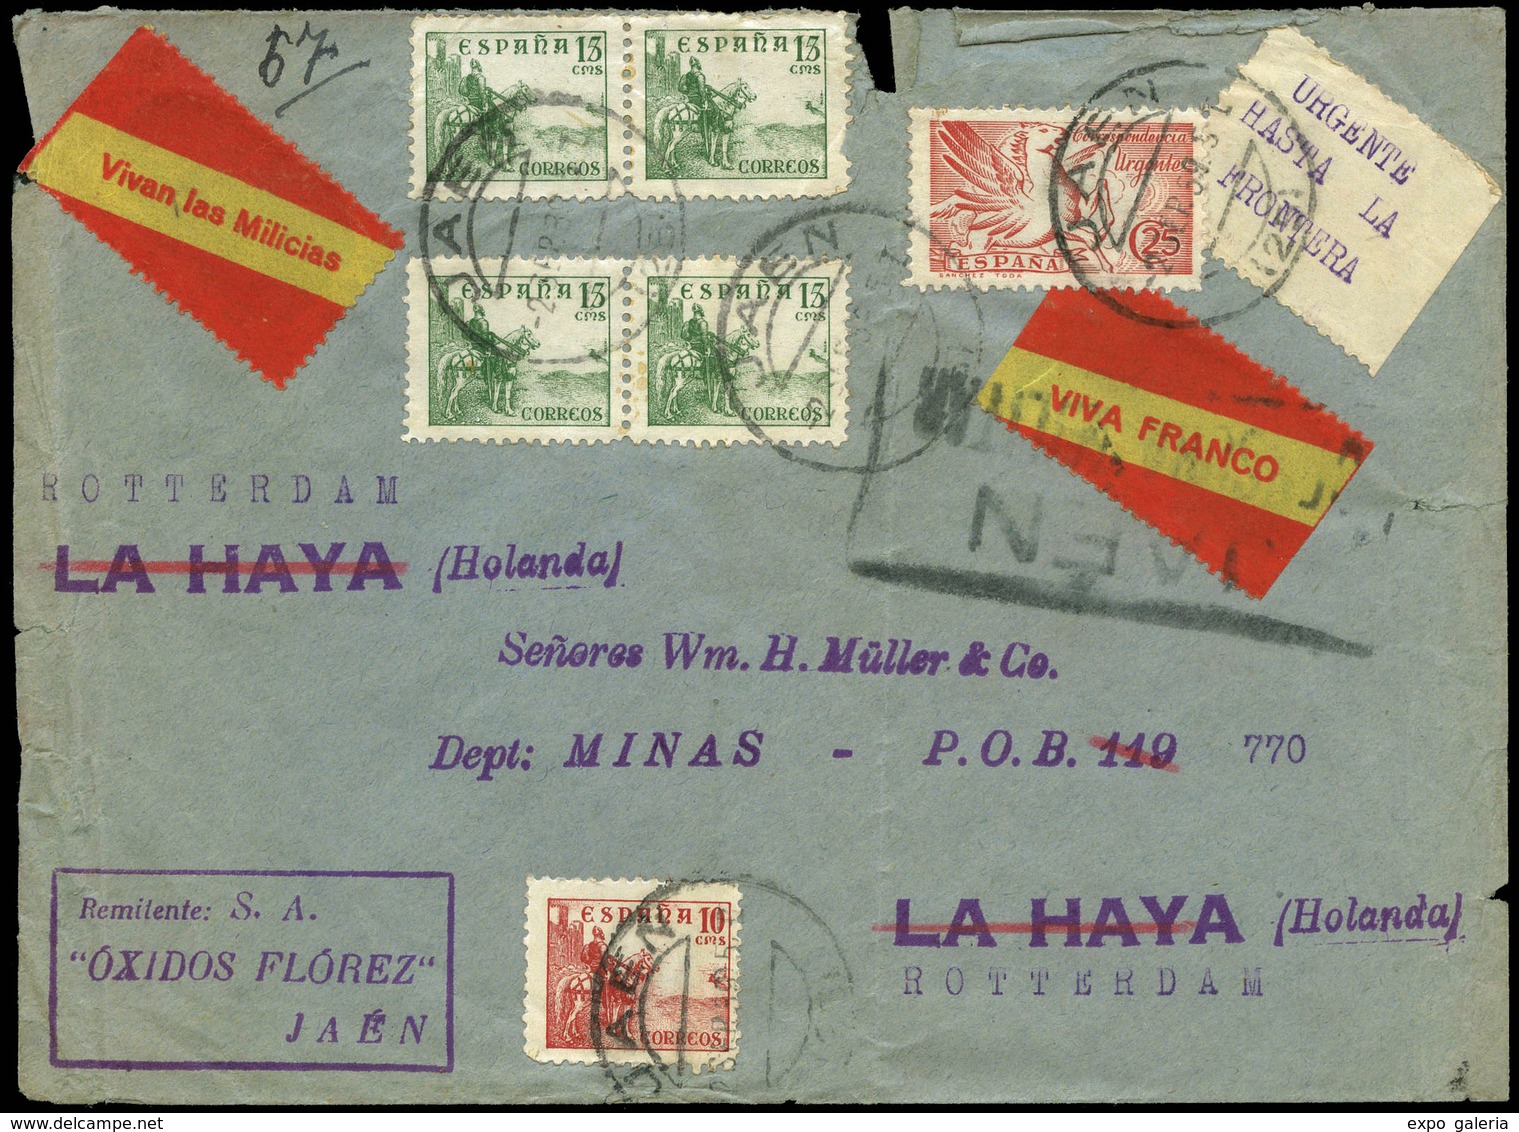 Ed. 879-818-819(4) - 1939. Carta Cda “Jaen 02/Sep/39” A La Haya Y Reexpedida A Rotterdam, Con 2 Raras Etiquetas - Emissions Nationalistes